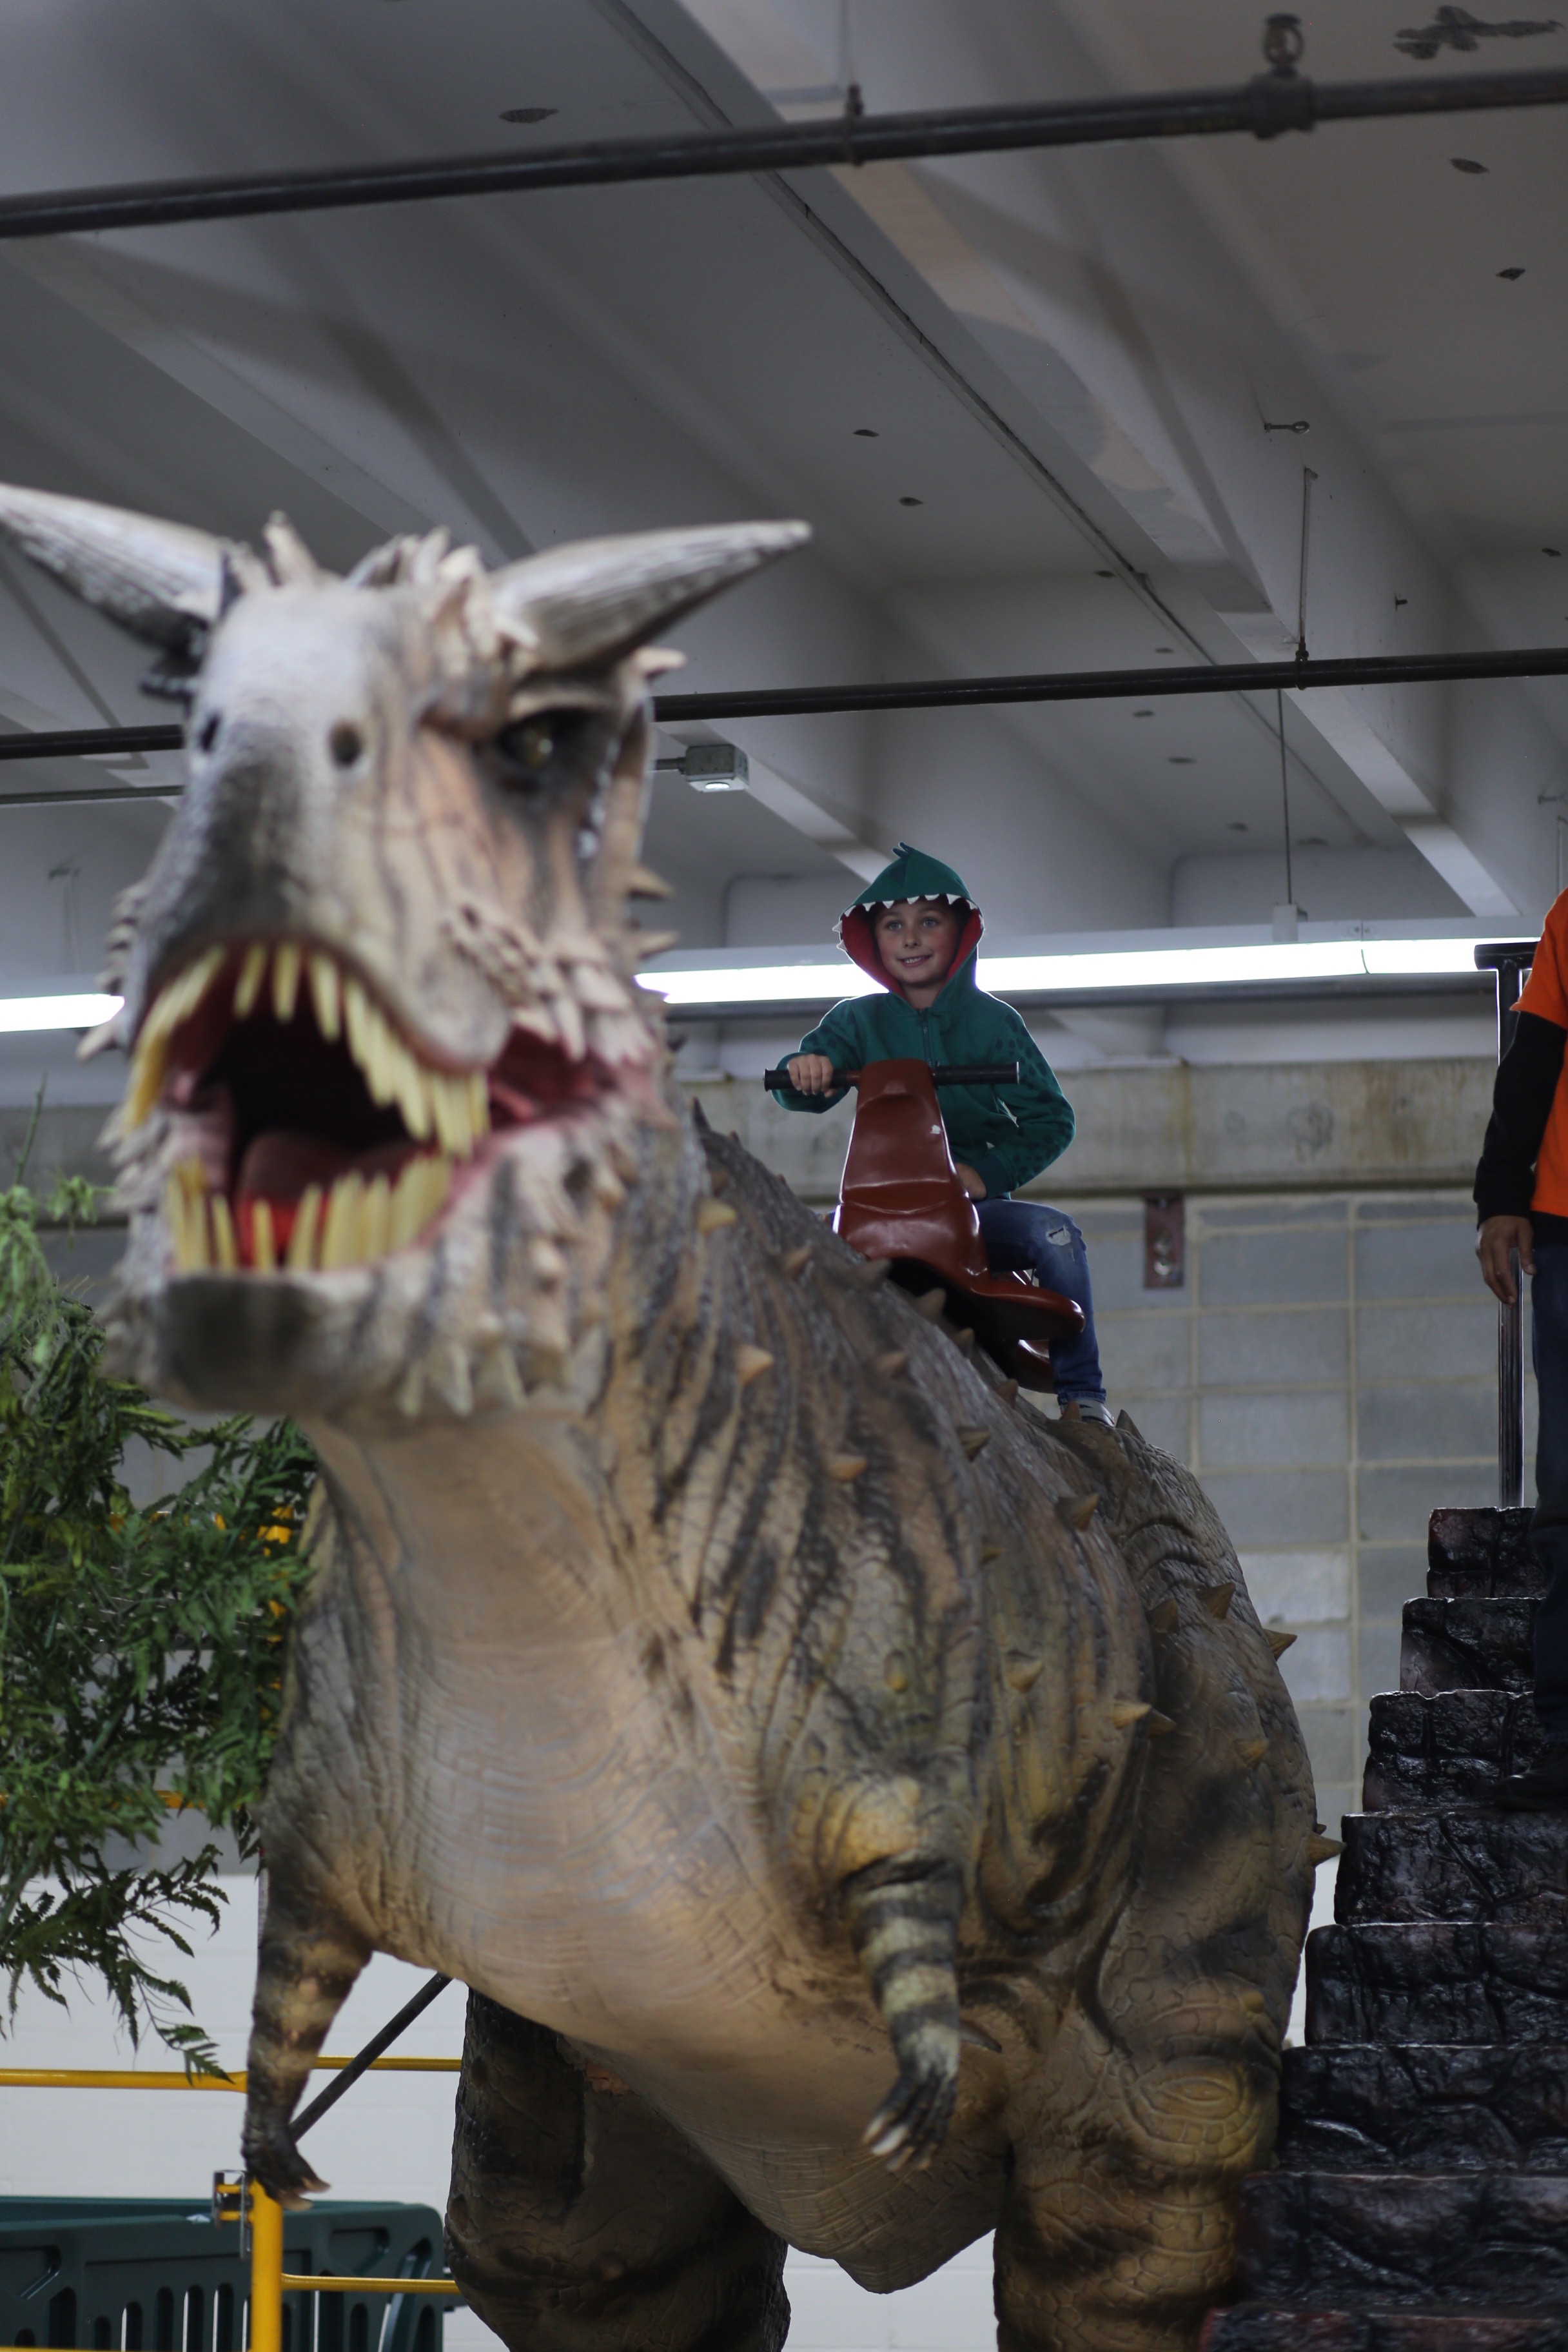 Jurassic Quest- Riding a HUGE dinosaur